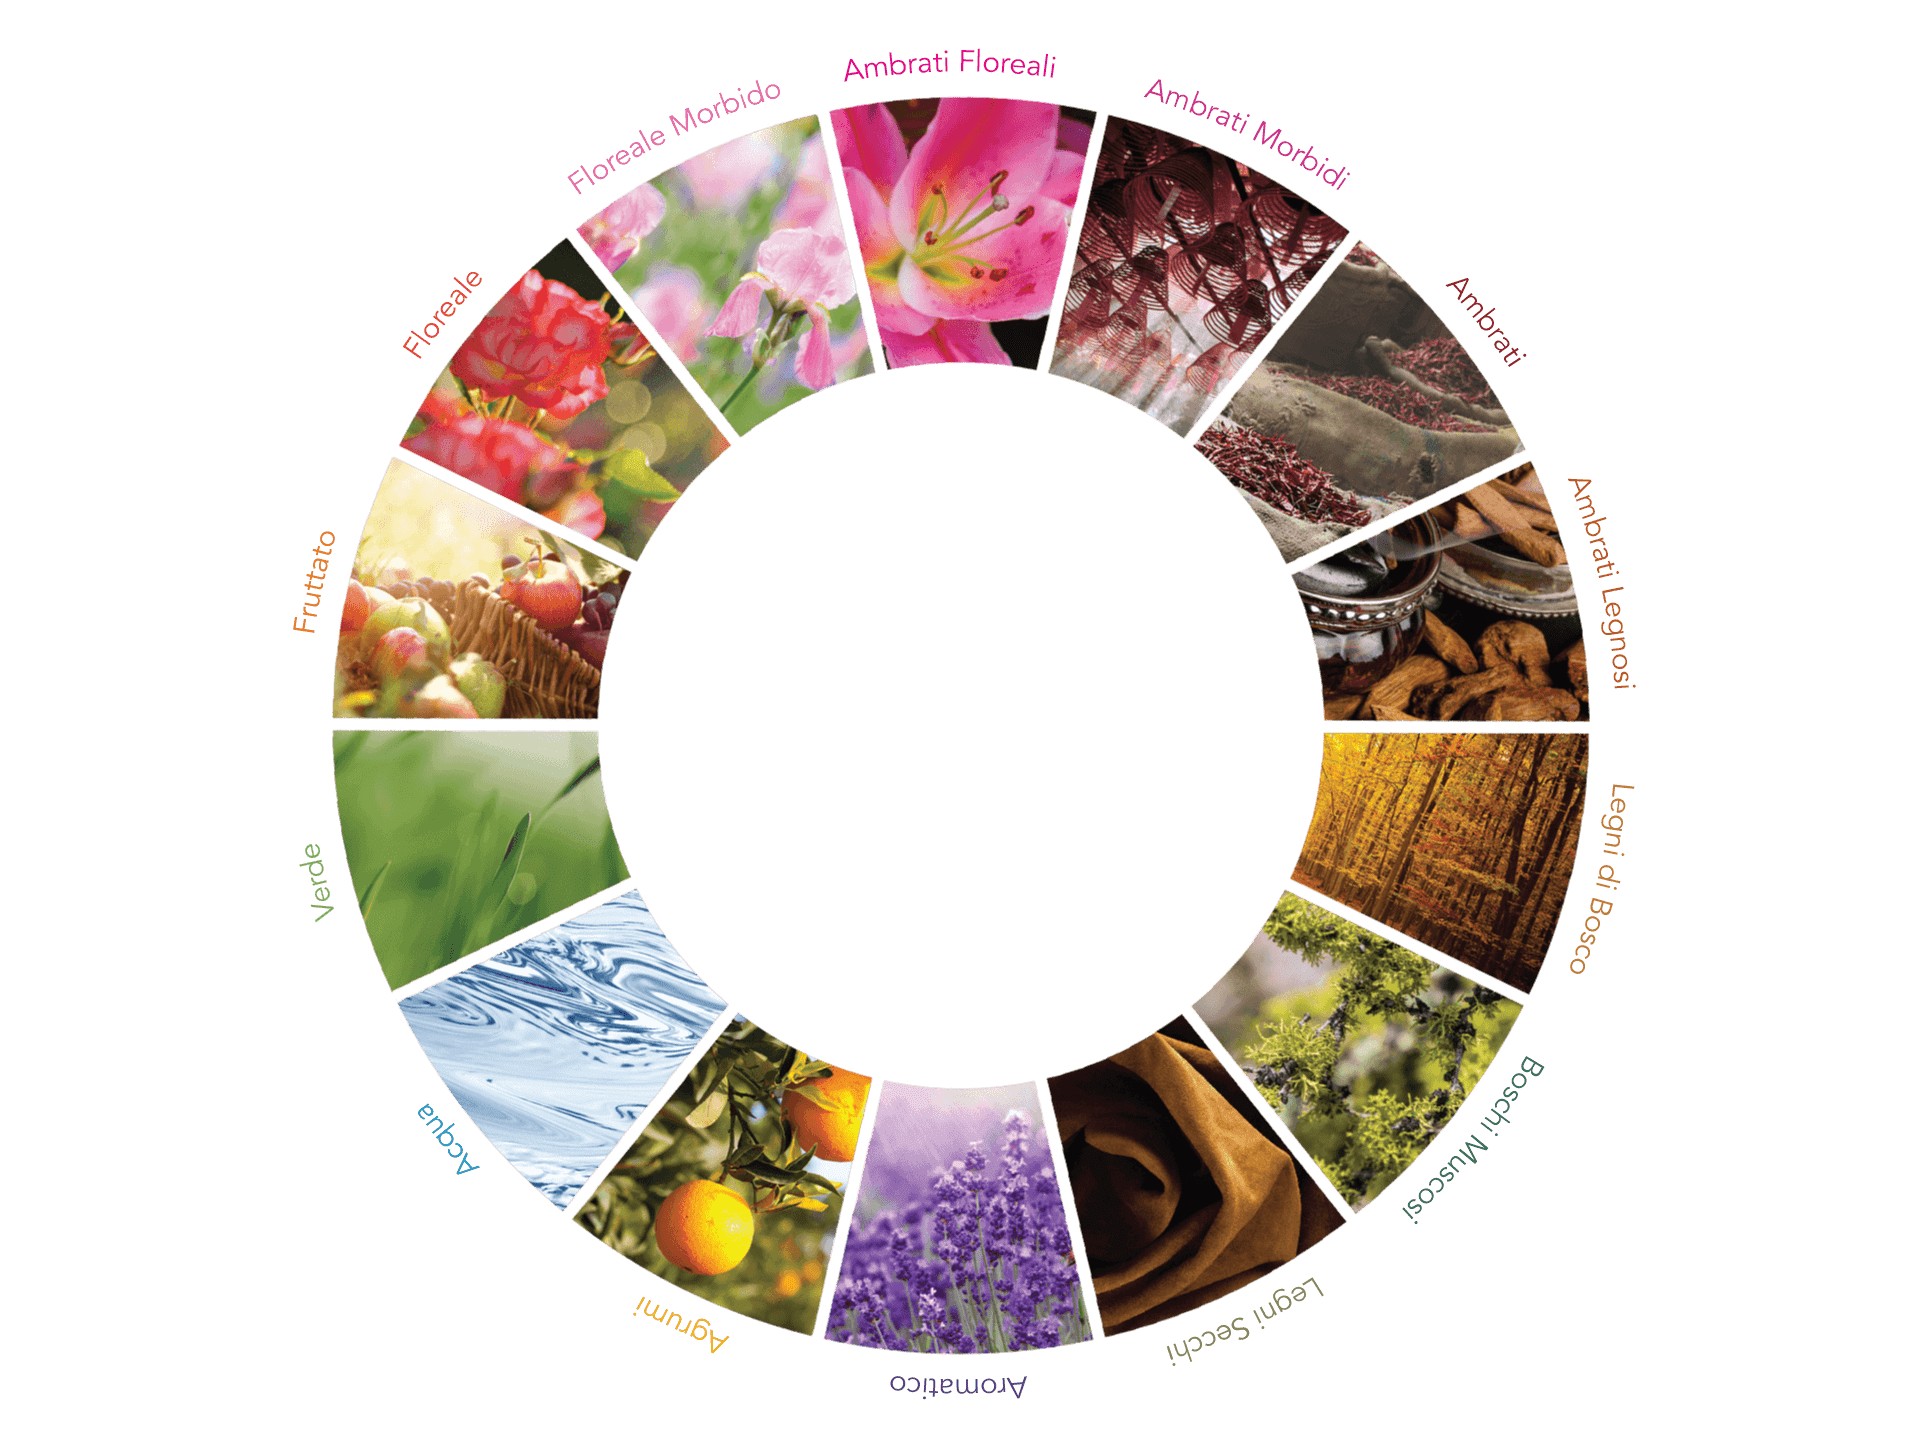 The Fragrance Wheel